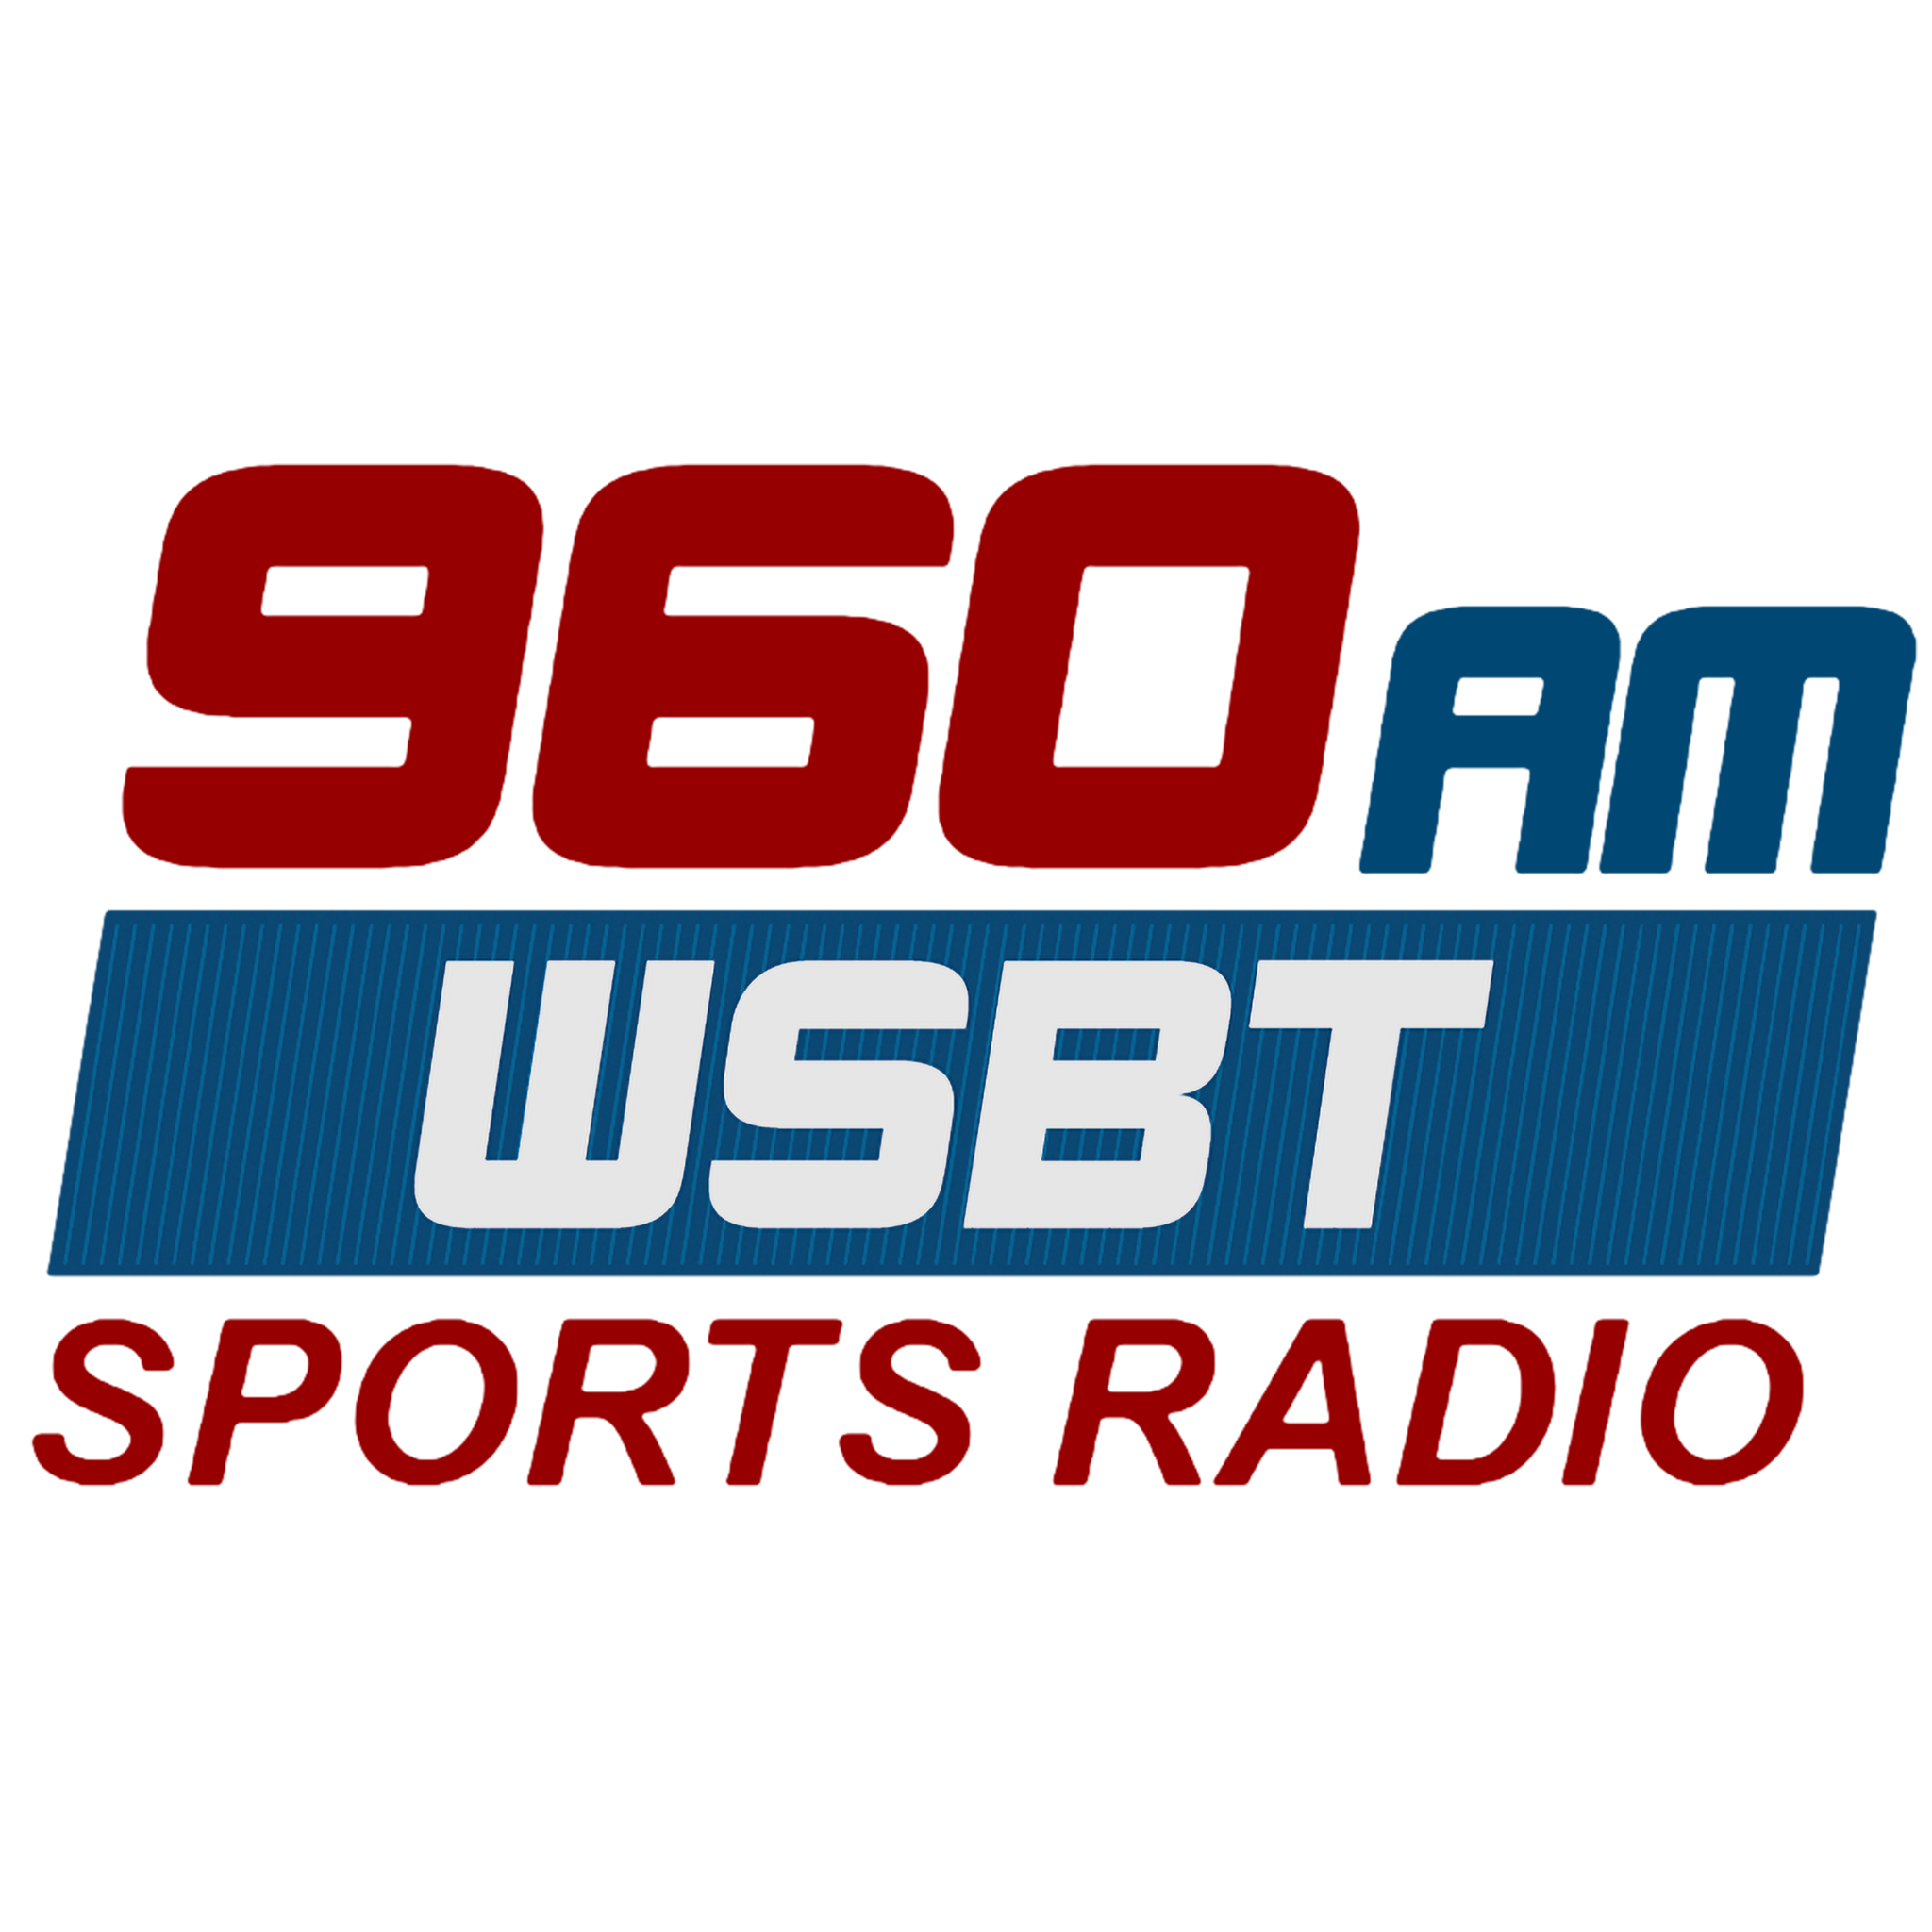 Sports Radio 960 WSBT